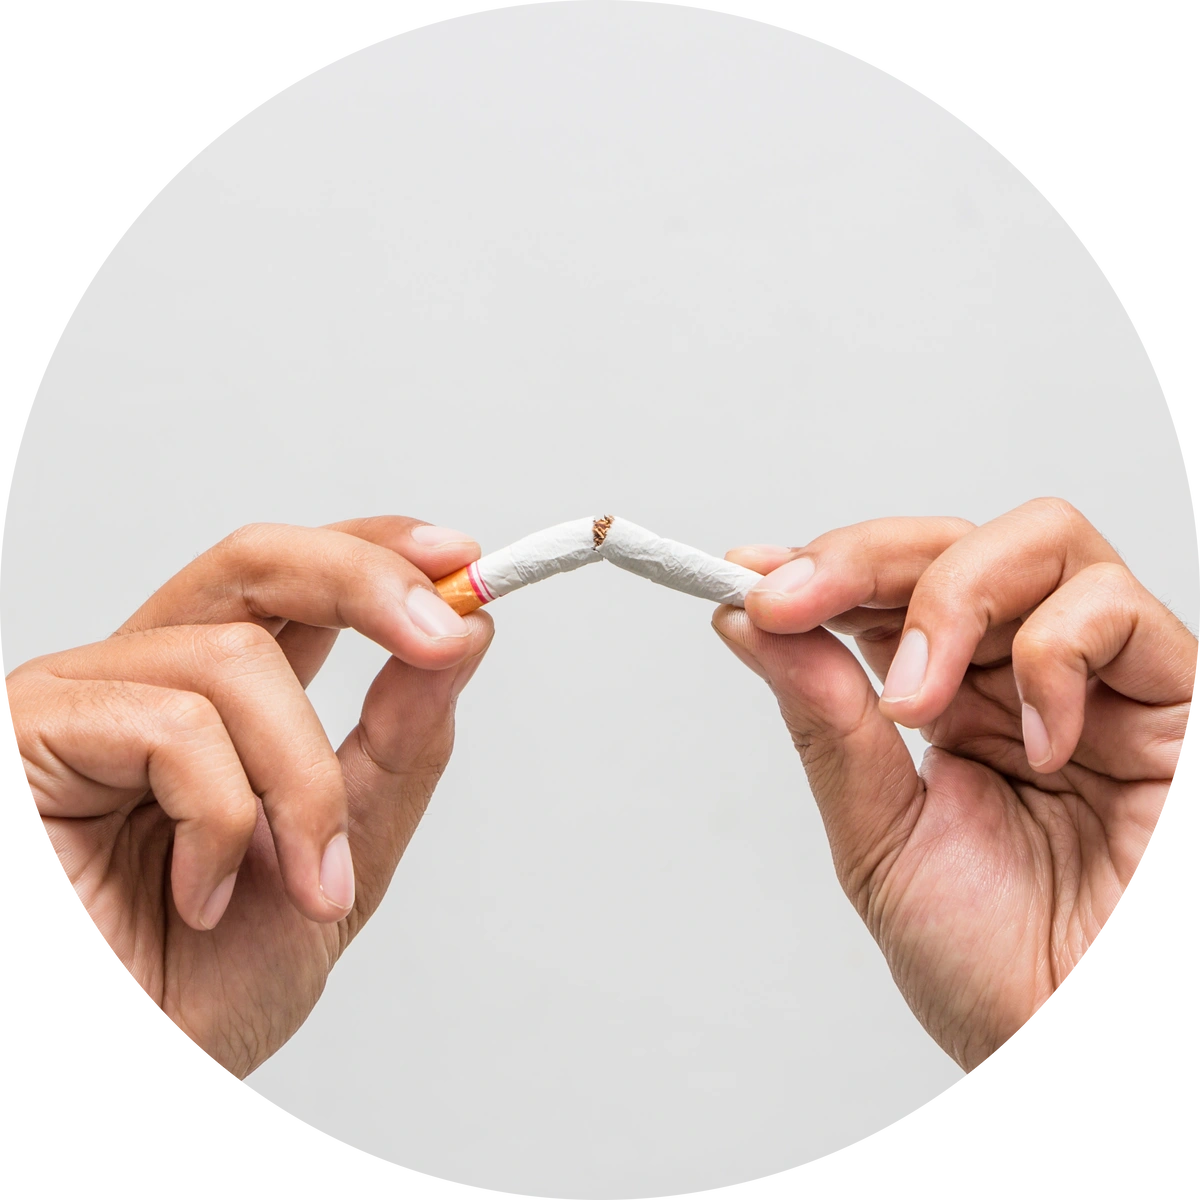 Does Smoking Increase Testosterone?